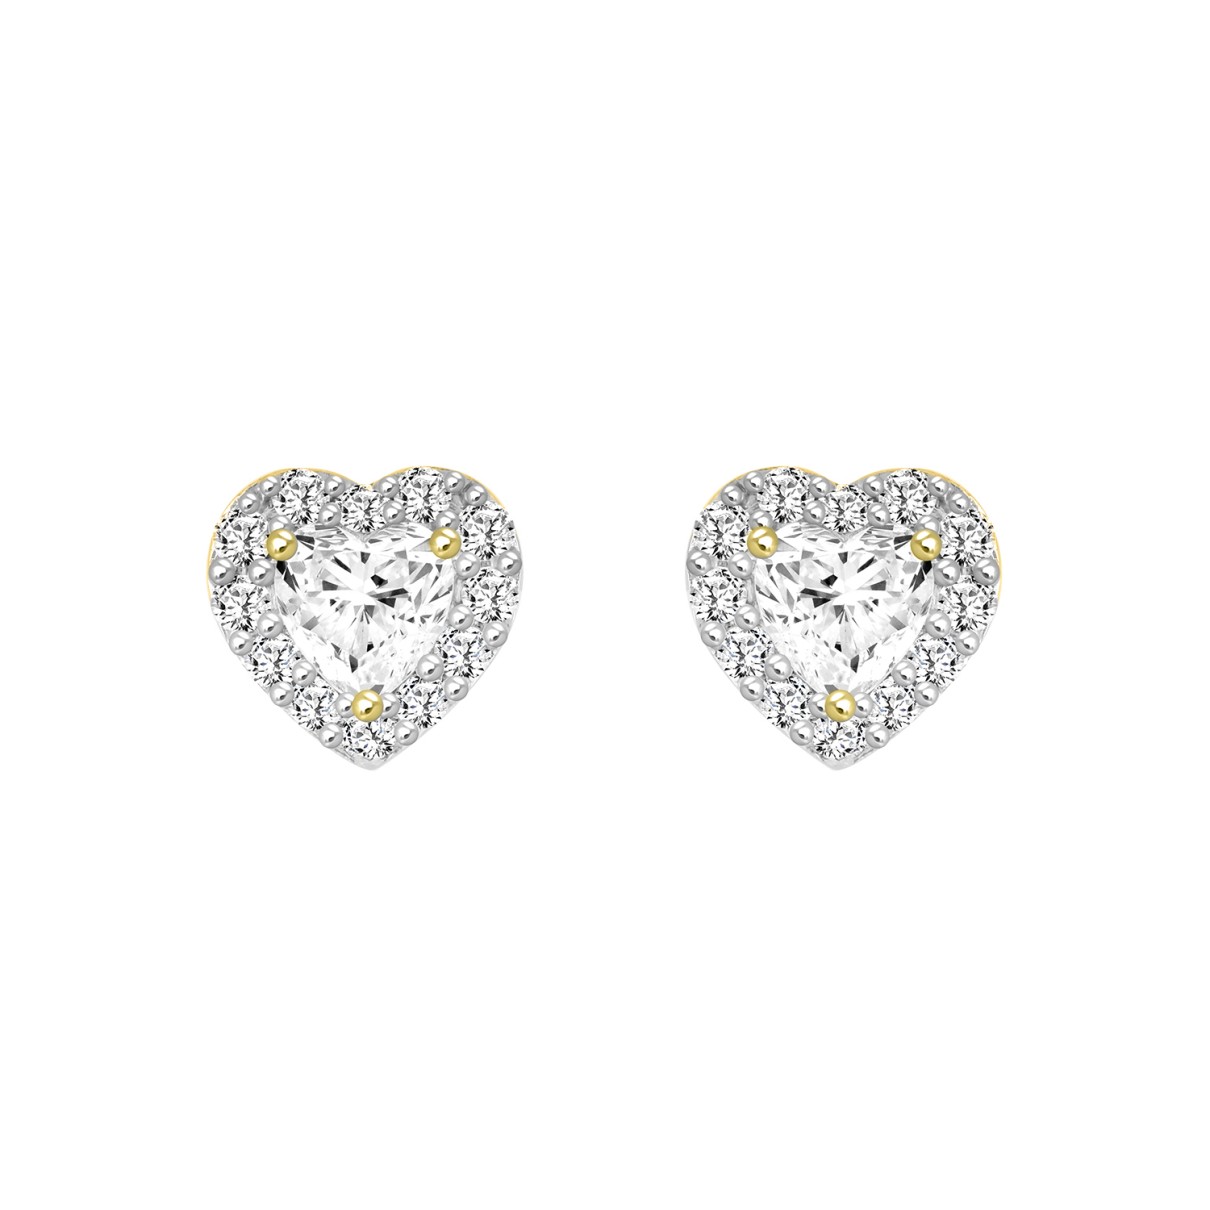 14K YELLOW GOLD1 3/8CT ROUND / HEART DIAMOND LADIES EARRINGS (CENTER STONE HEART DIAMOND 1CT )